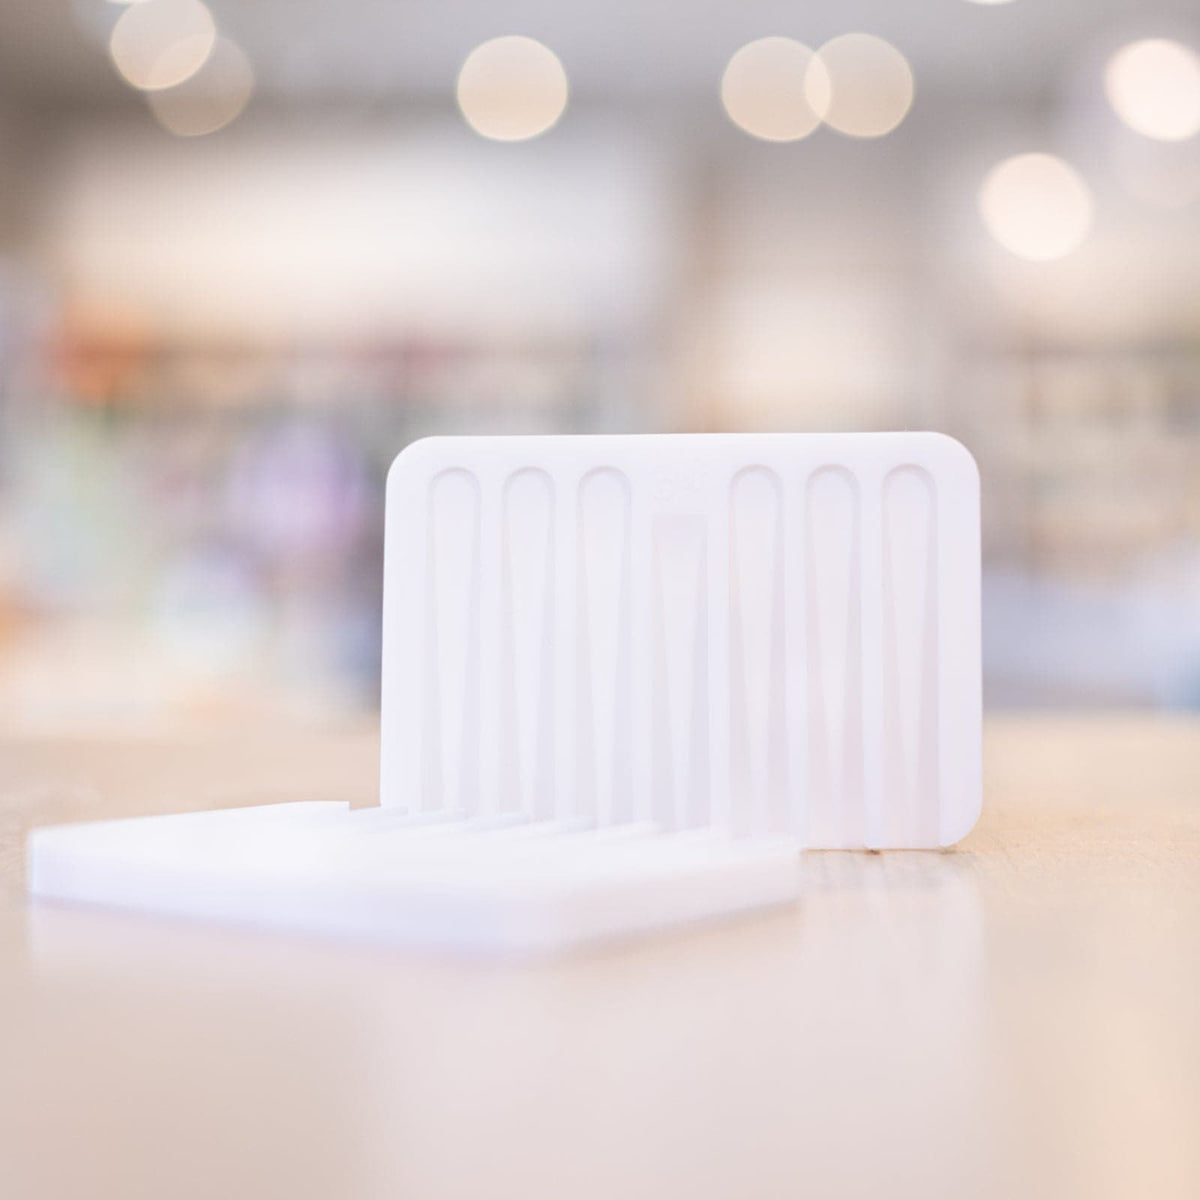 Silicone Soap Dish - type:A deodorant